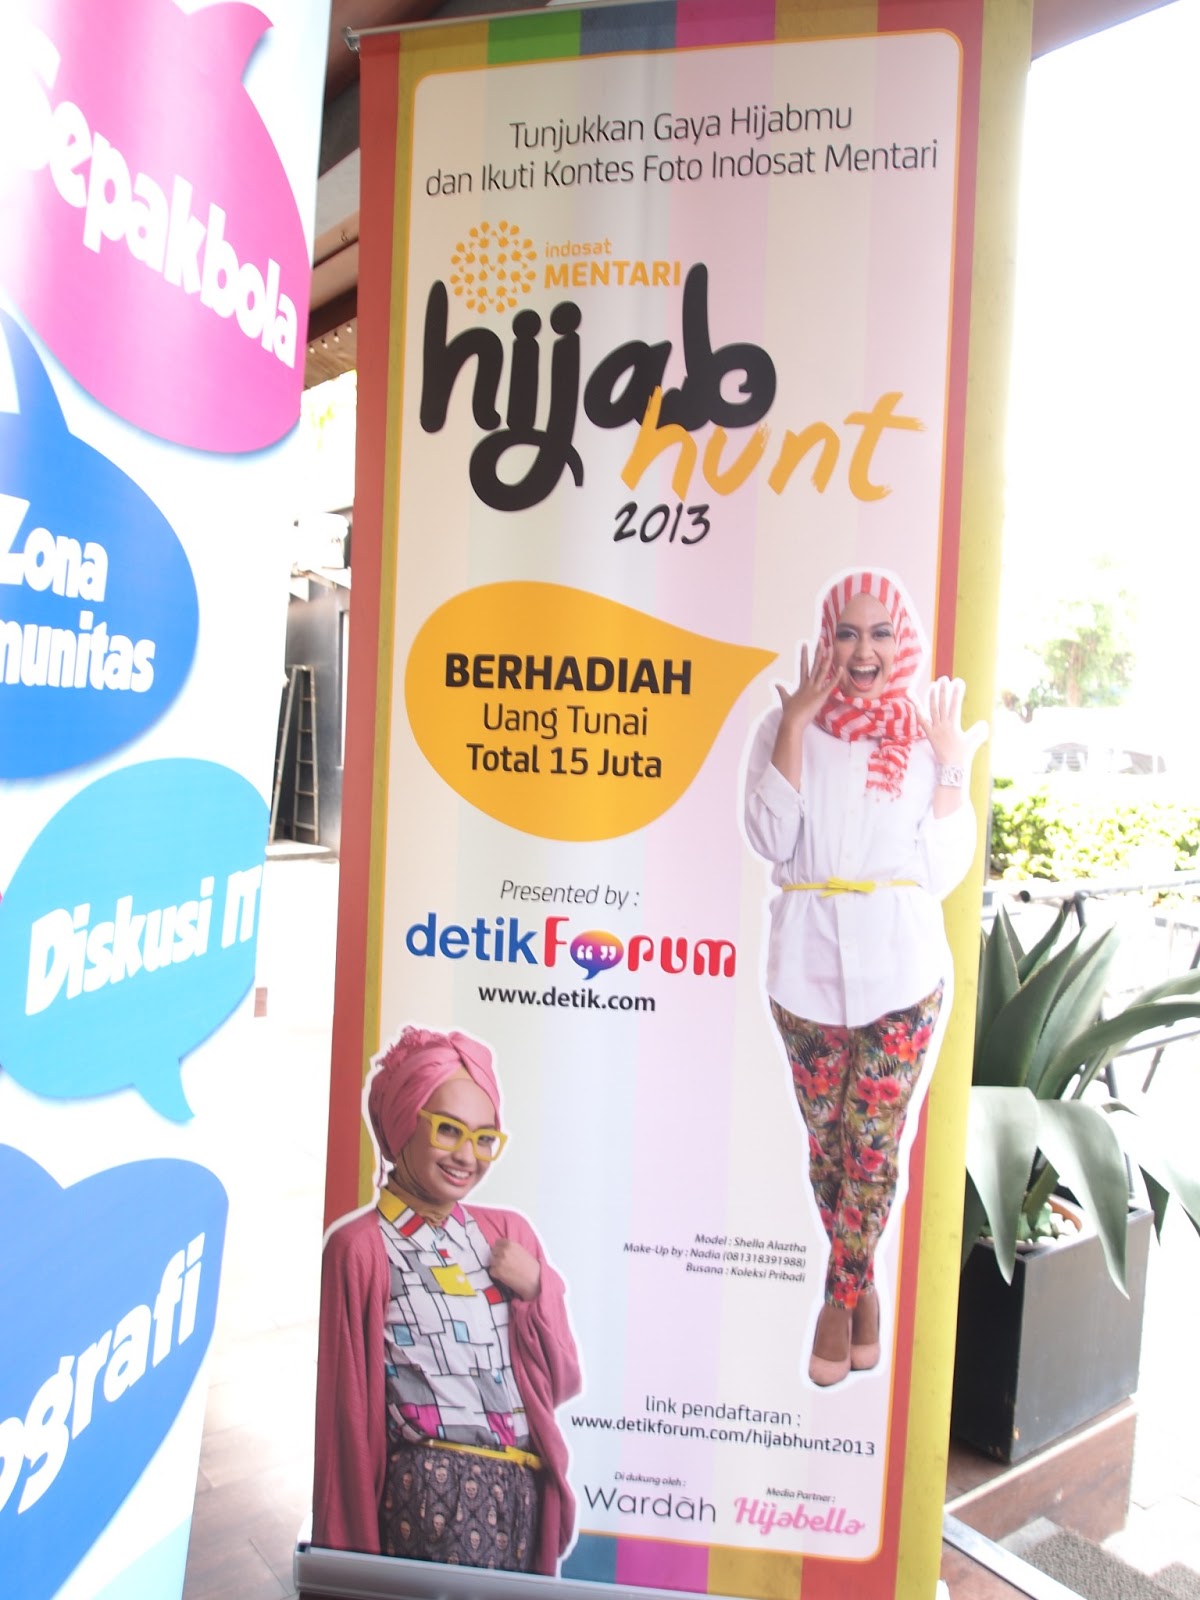 SUCI UTAMI - Productive Housewife: Indosat Mentari "Hijab 